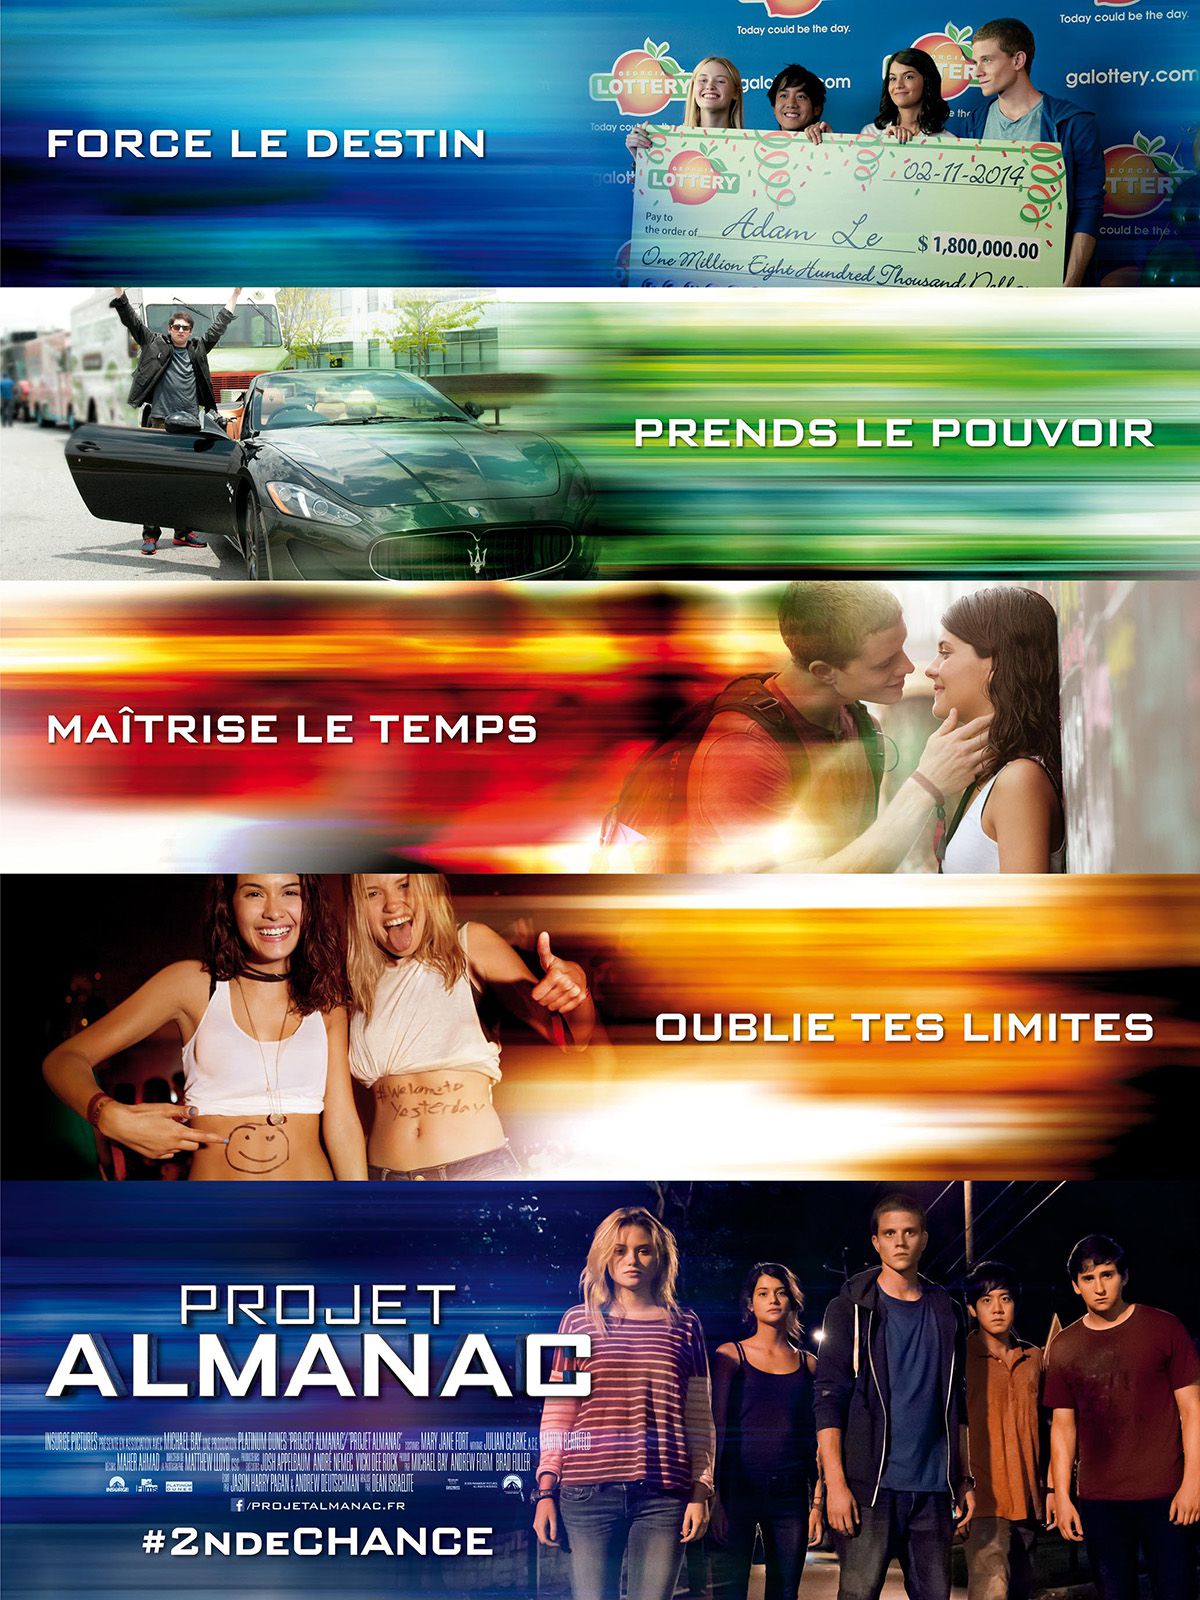 Projet Almanac - Film (2014) streaming VF gratuit complet